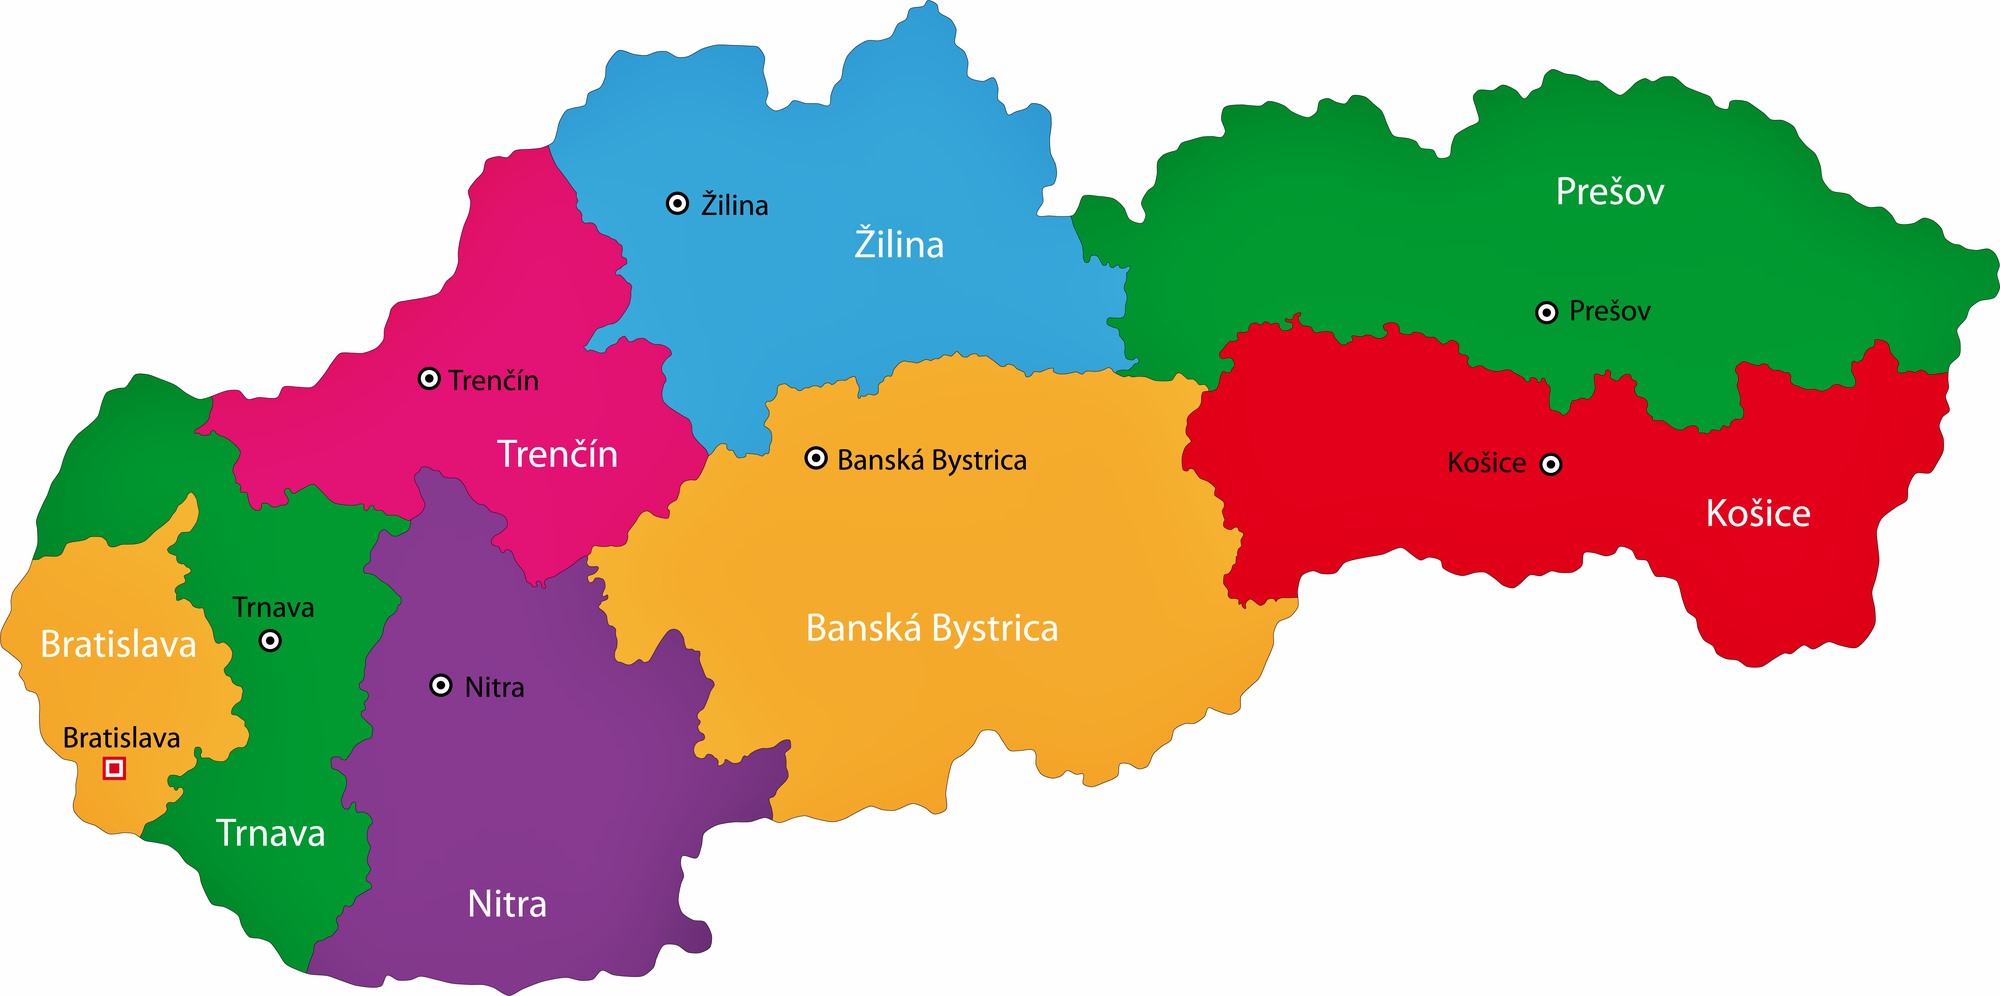 Slovak Republic Land Use Map Vector Maps - vrogue.co